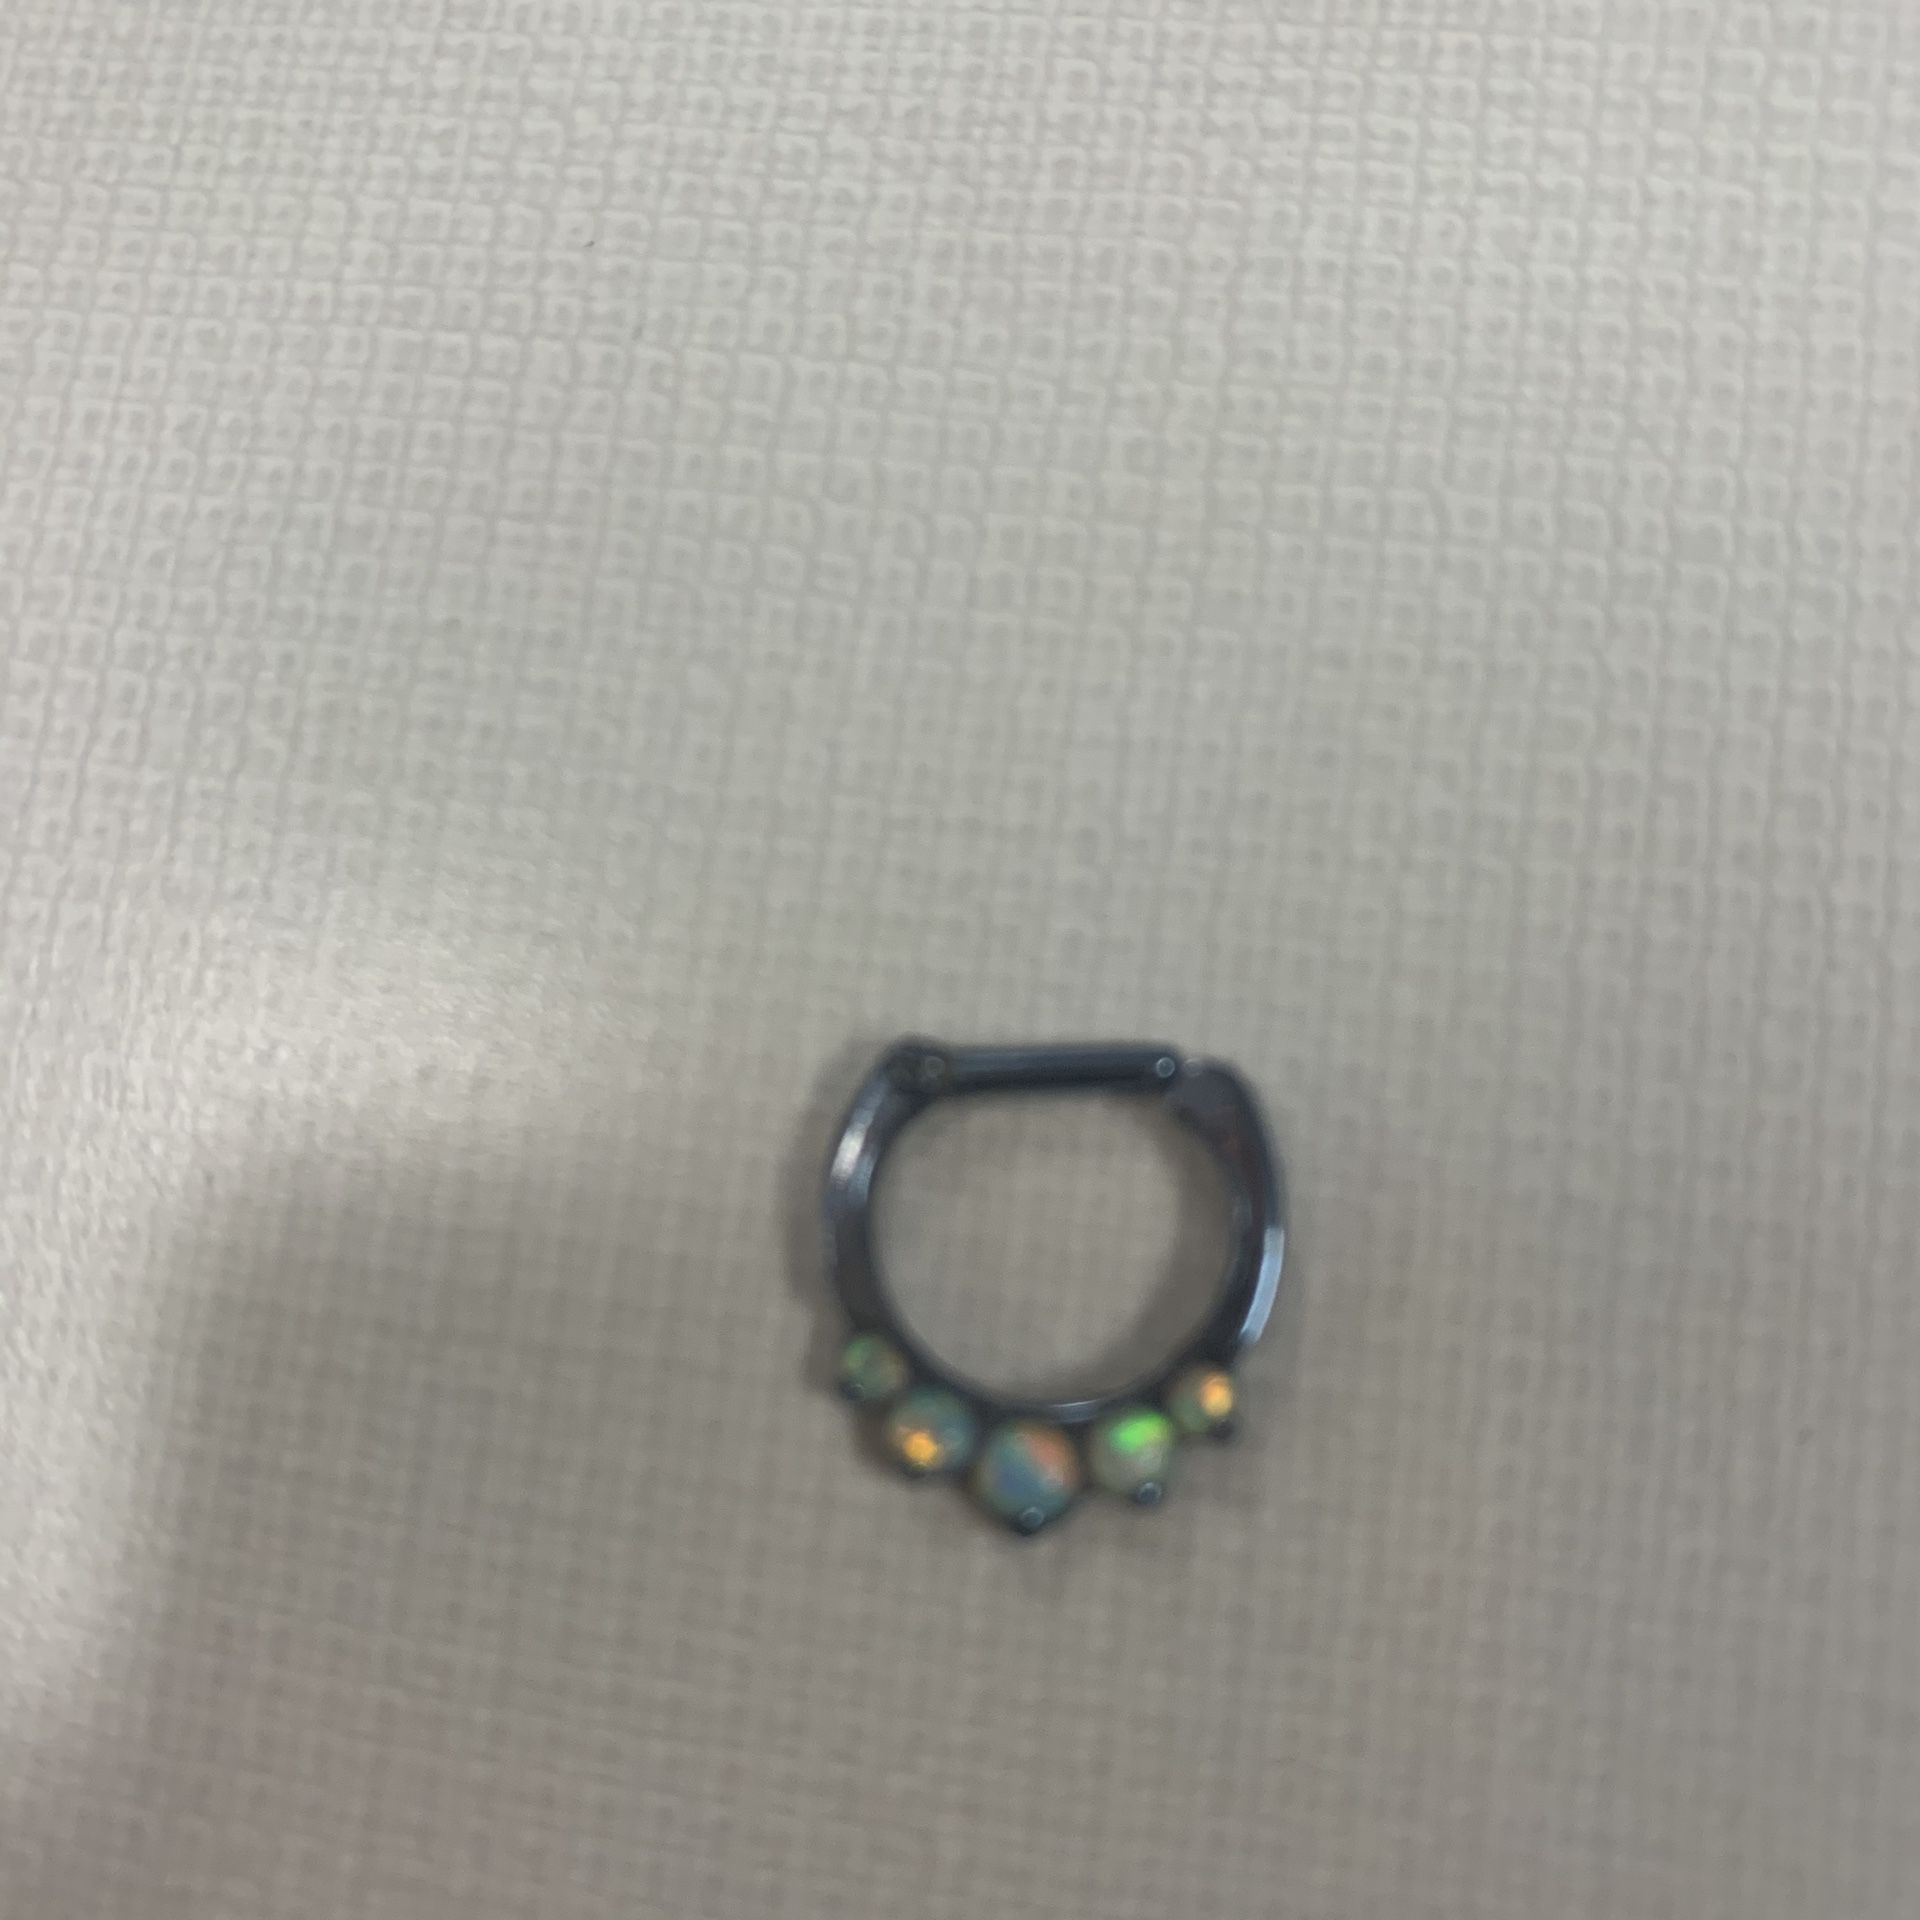 Industrial strength custom septum clicker 14g 5/16 blue and opal